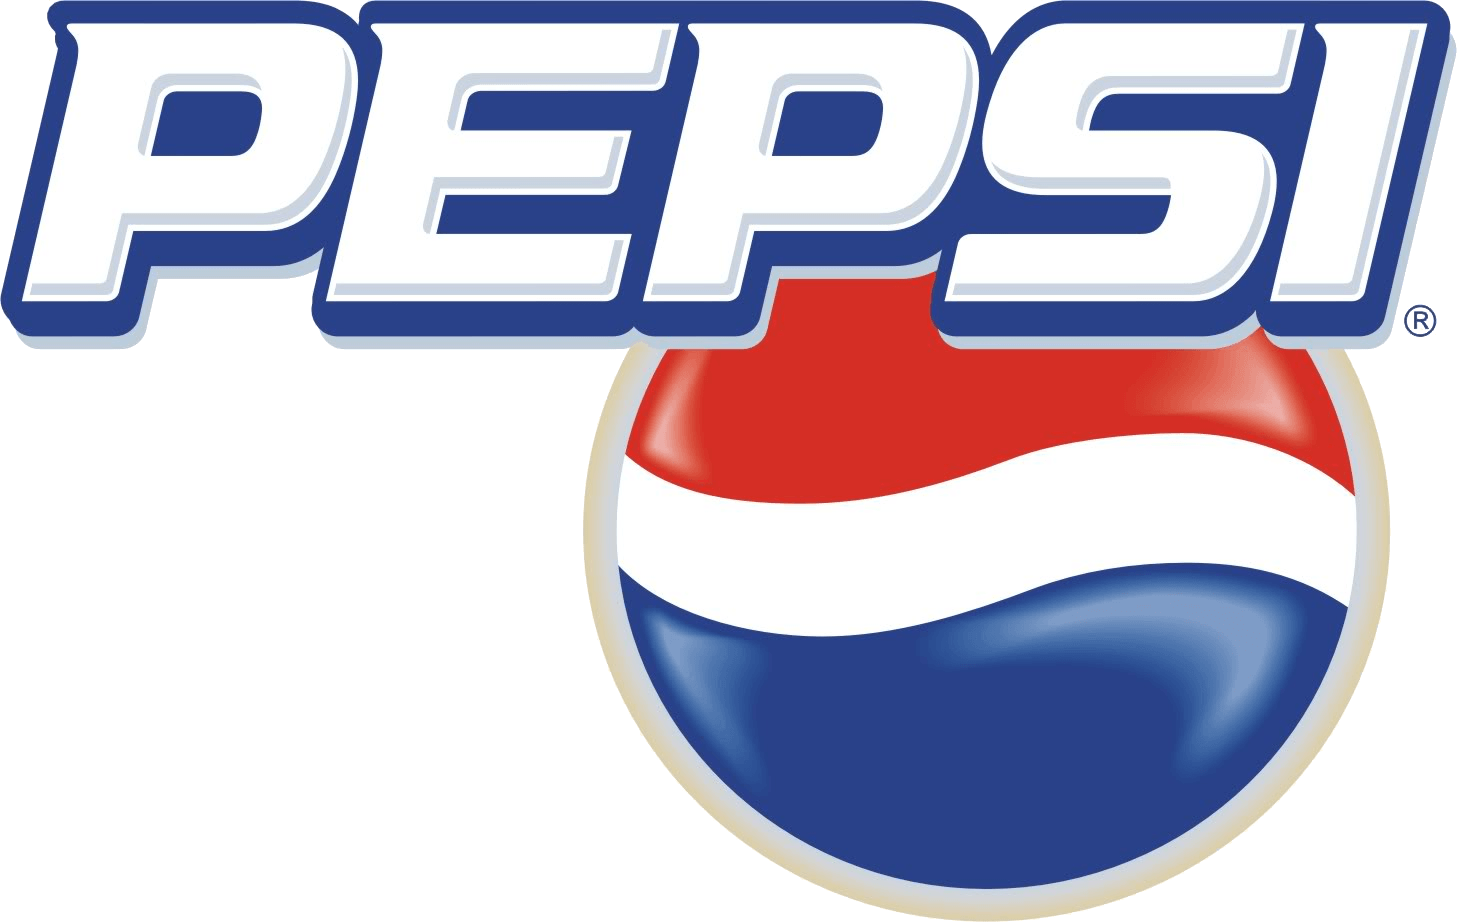 Pepsi One Logo - Pepsi | Logopedia | FANDOM powered by Wikia